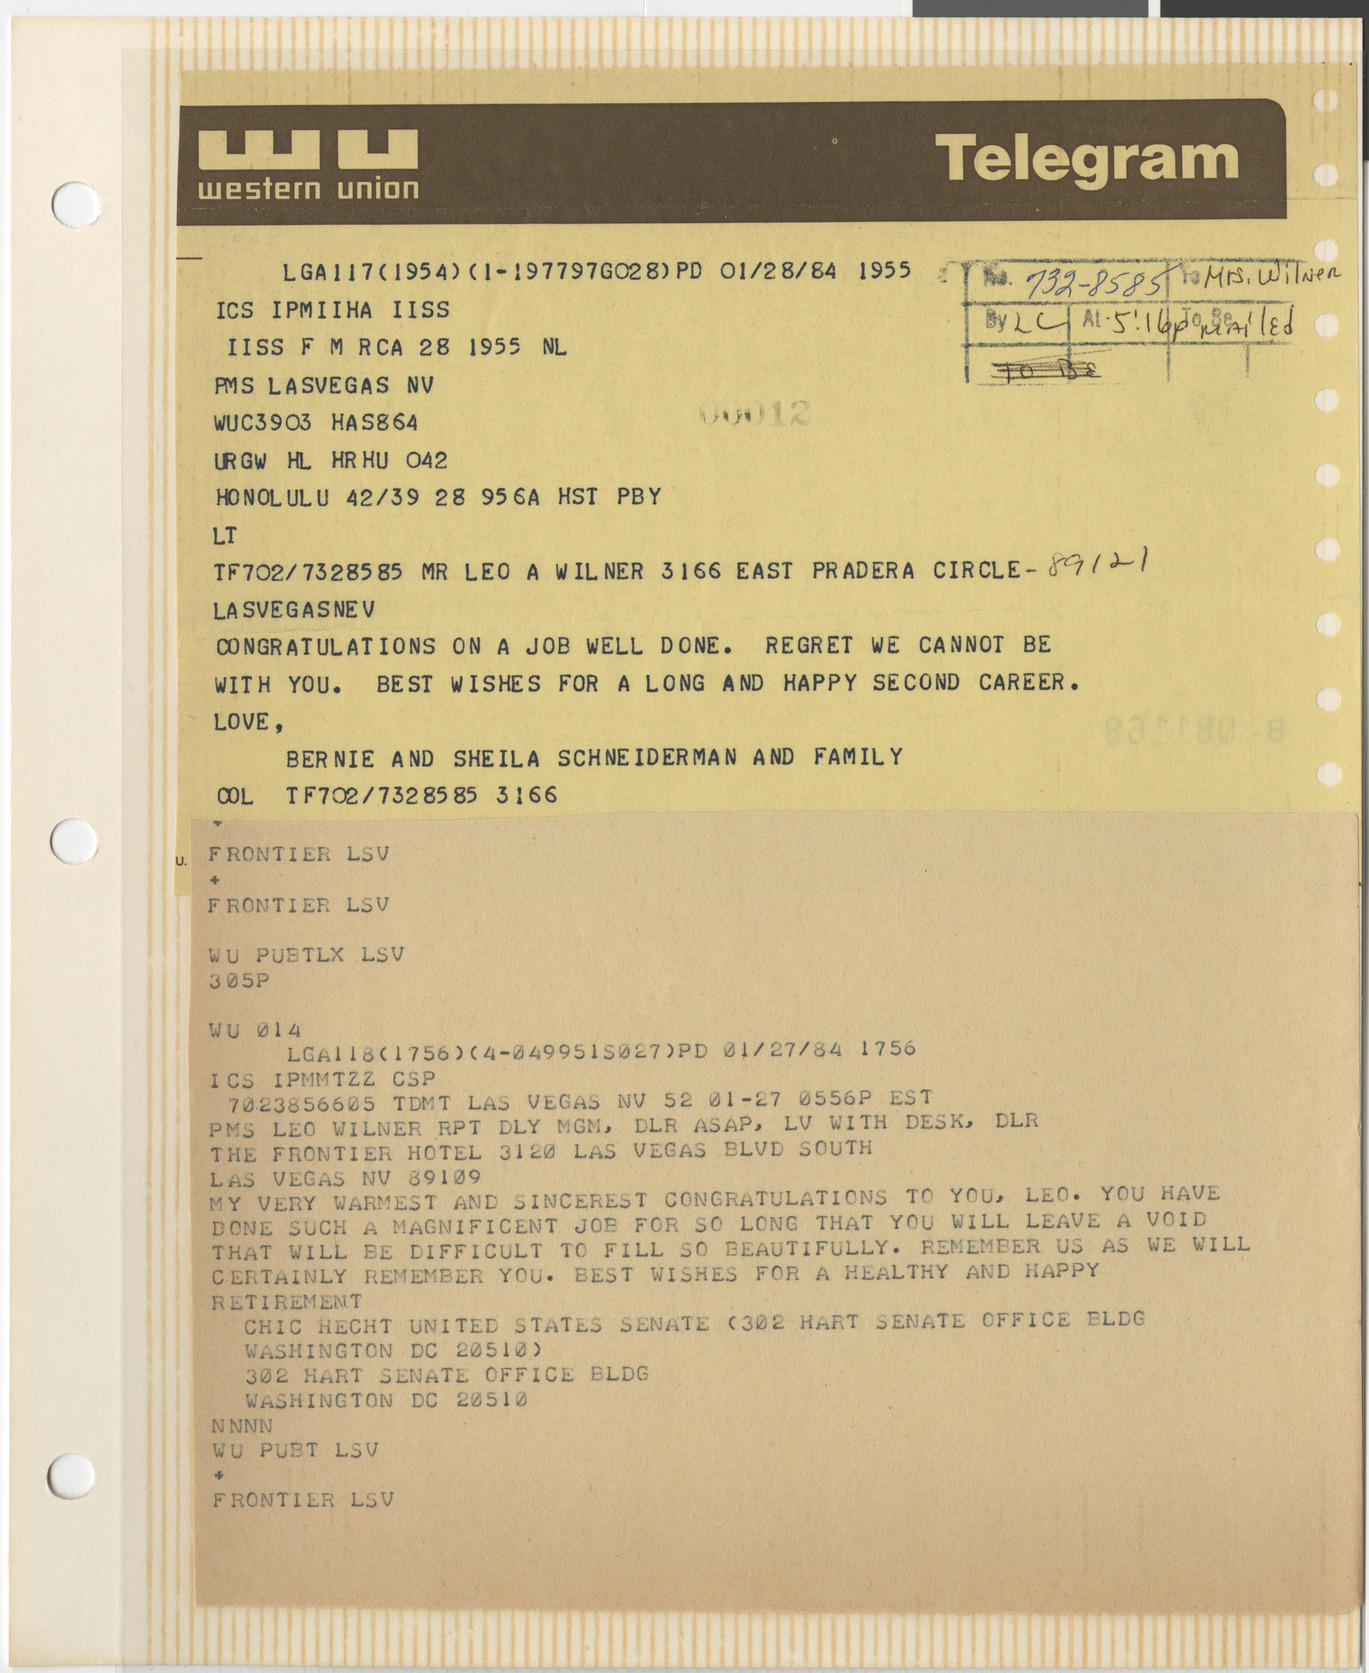 Telegram from Bernie and Sheila Schneiderman to Leo Wilner, and Telegram from Chic Hecht to Leo Wilner, January 1984